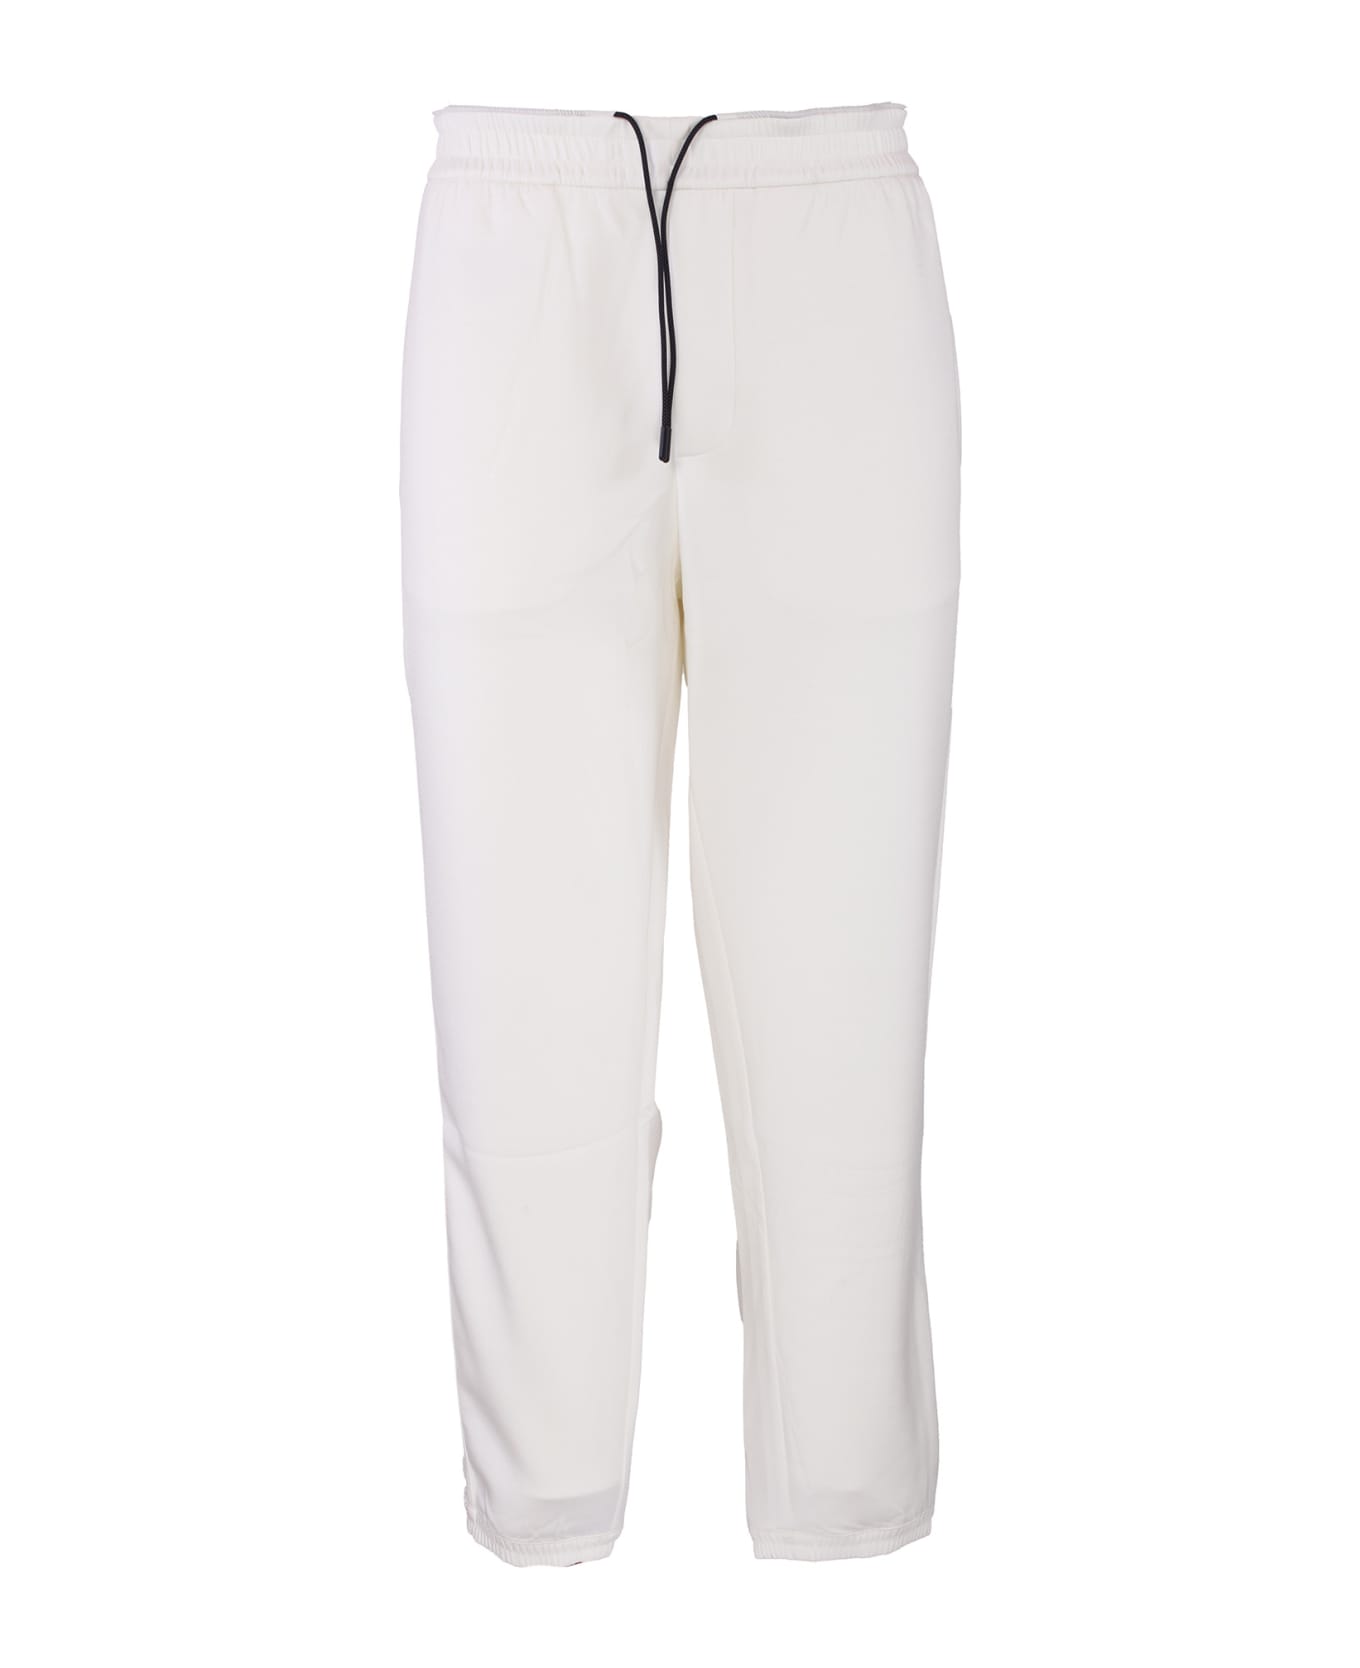 Emporio Armani Travel Essential Double Jersey Jogger Trousers - White